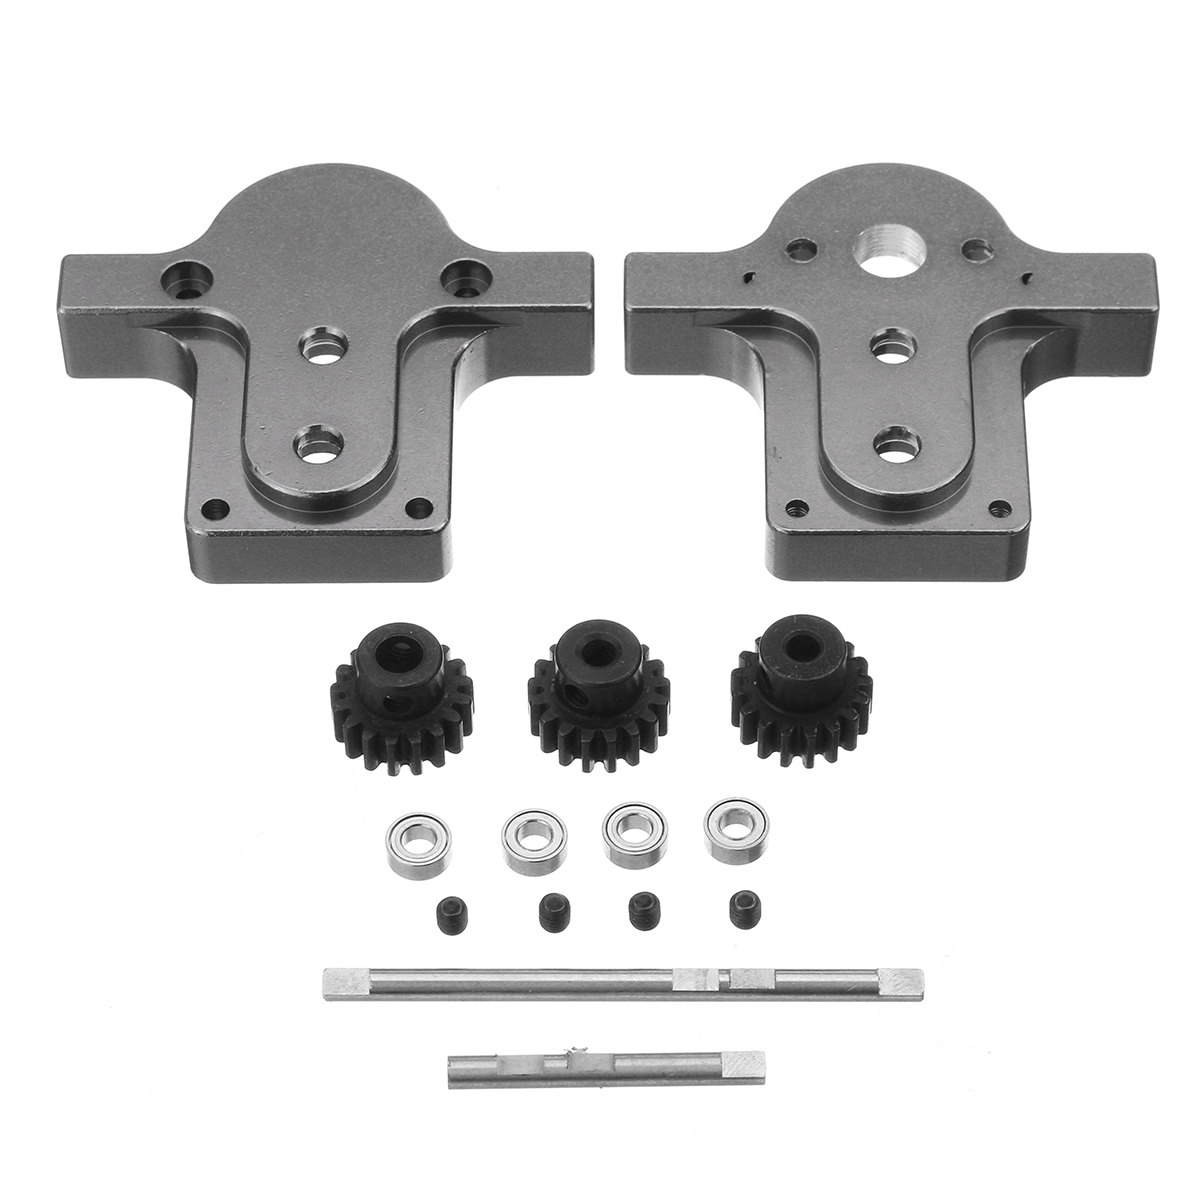 

1/16 Metal Transmission Gear Box Kit for WPL B16 B24 B14 C14 C24 B36 Matched Screws